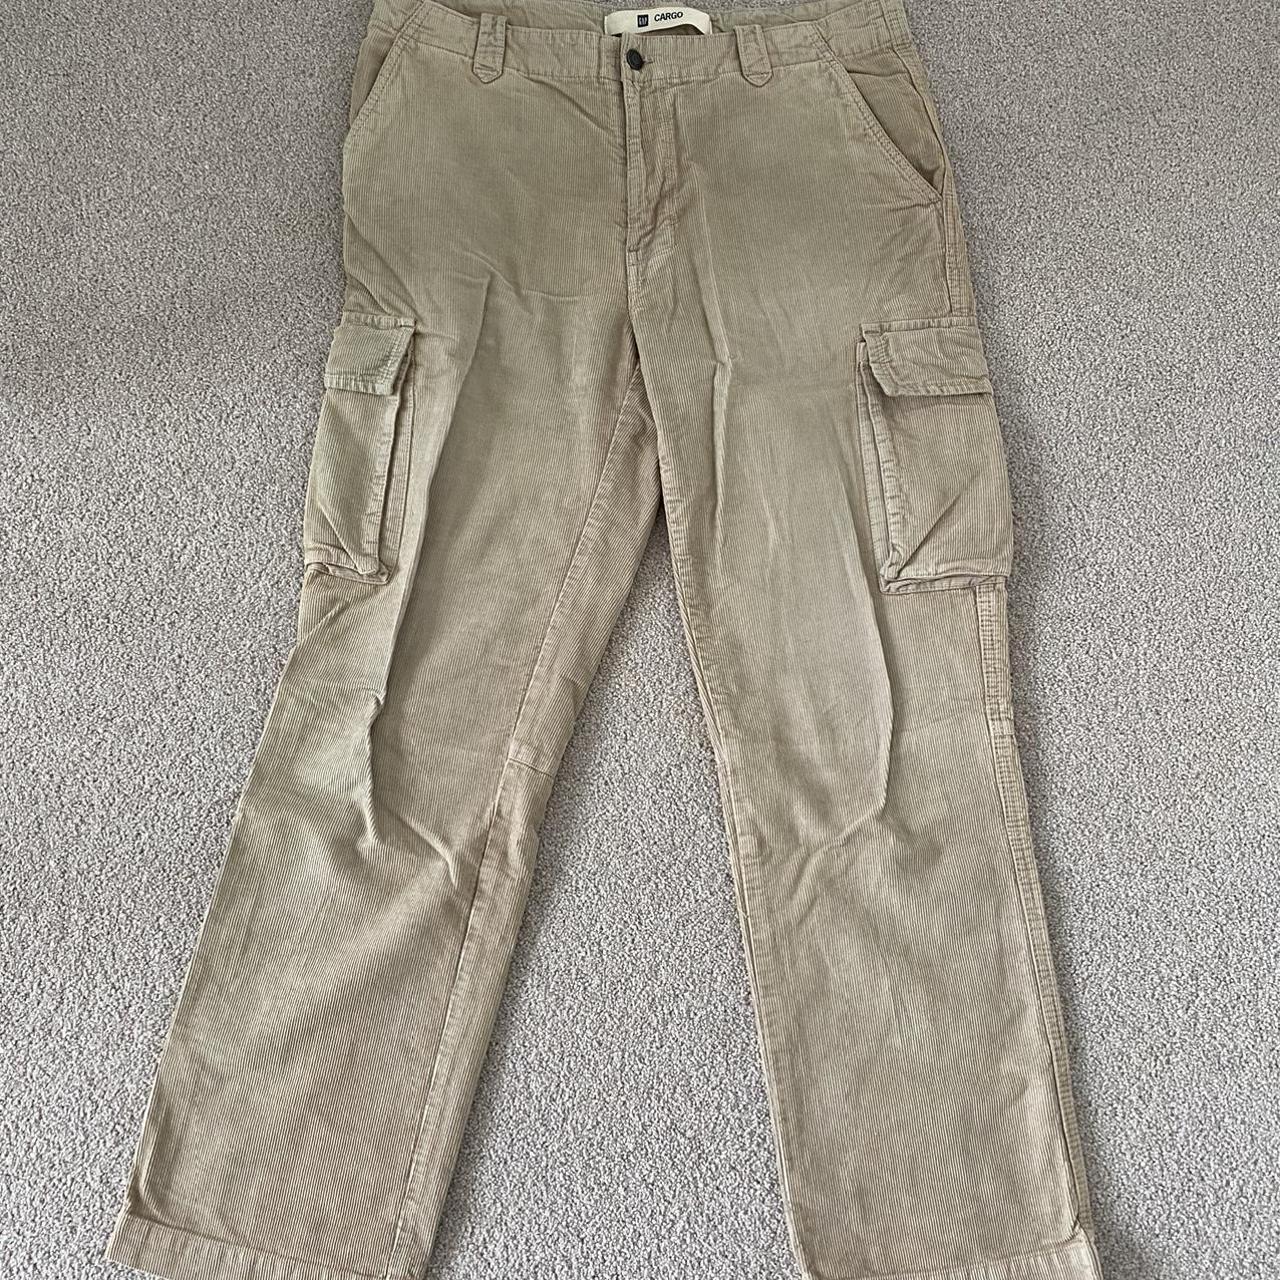 Vintage Gap cream corduroy cargo pants Straight... - Depop